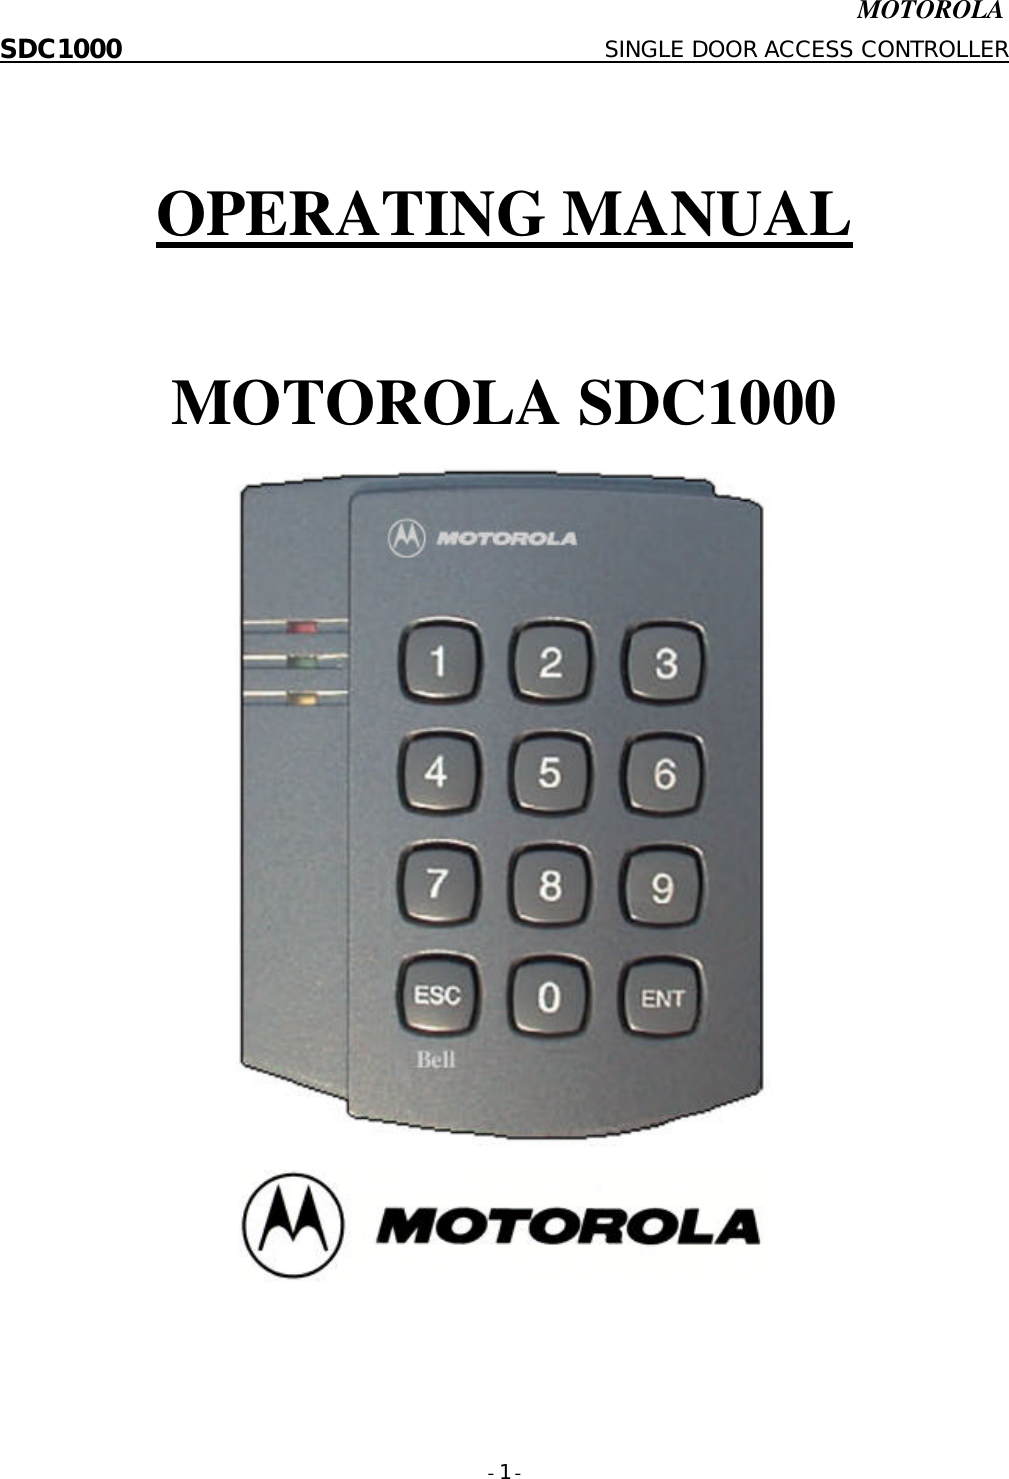                       MOTOROLA SDC1000                           SINGLE DOOR ACCESS CONTROLLER - 1 -    OPERATING MANUAL    MOTOROLA SDC1000         